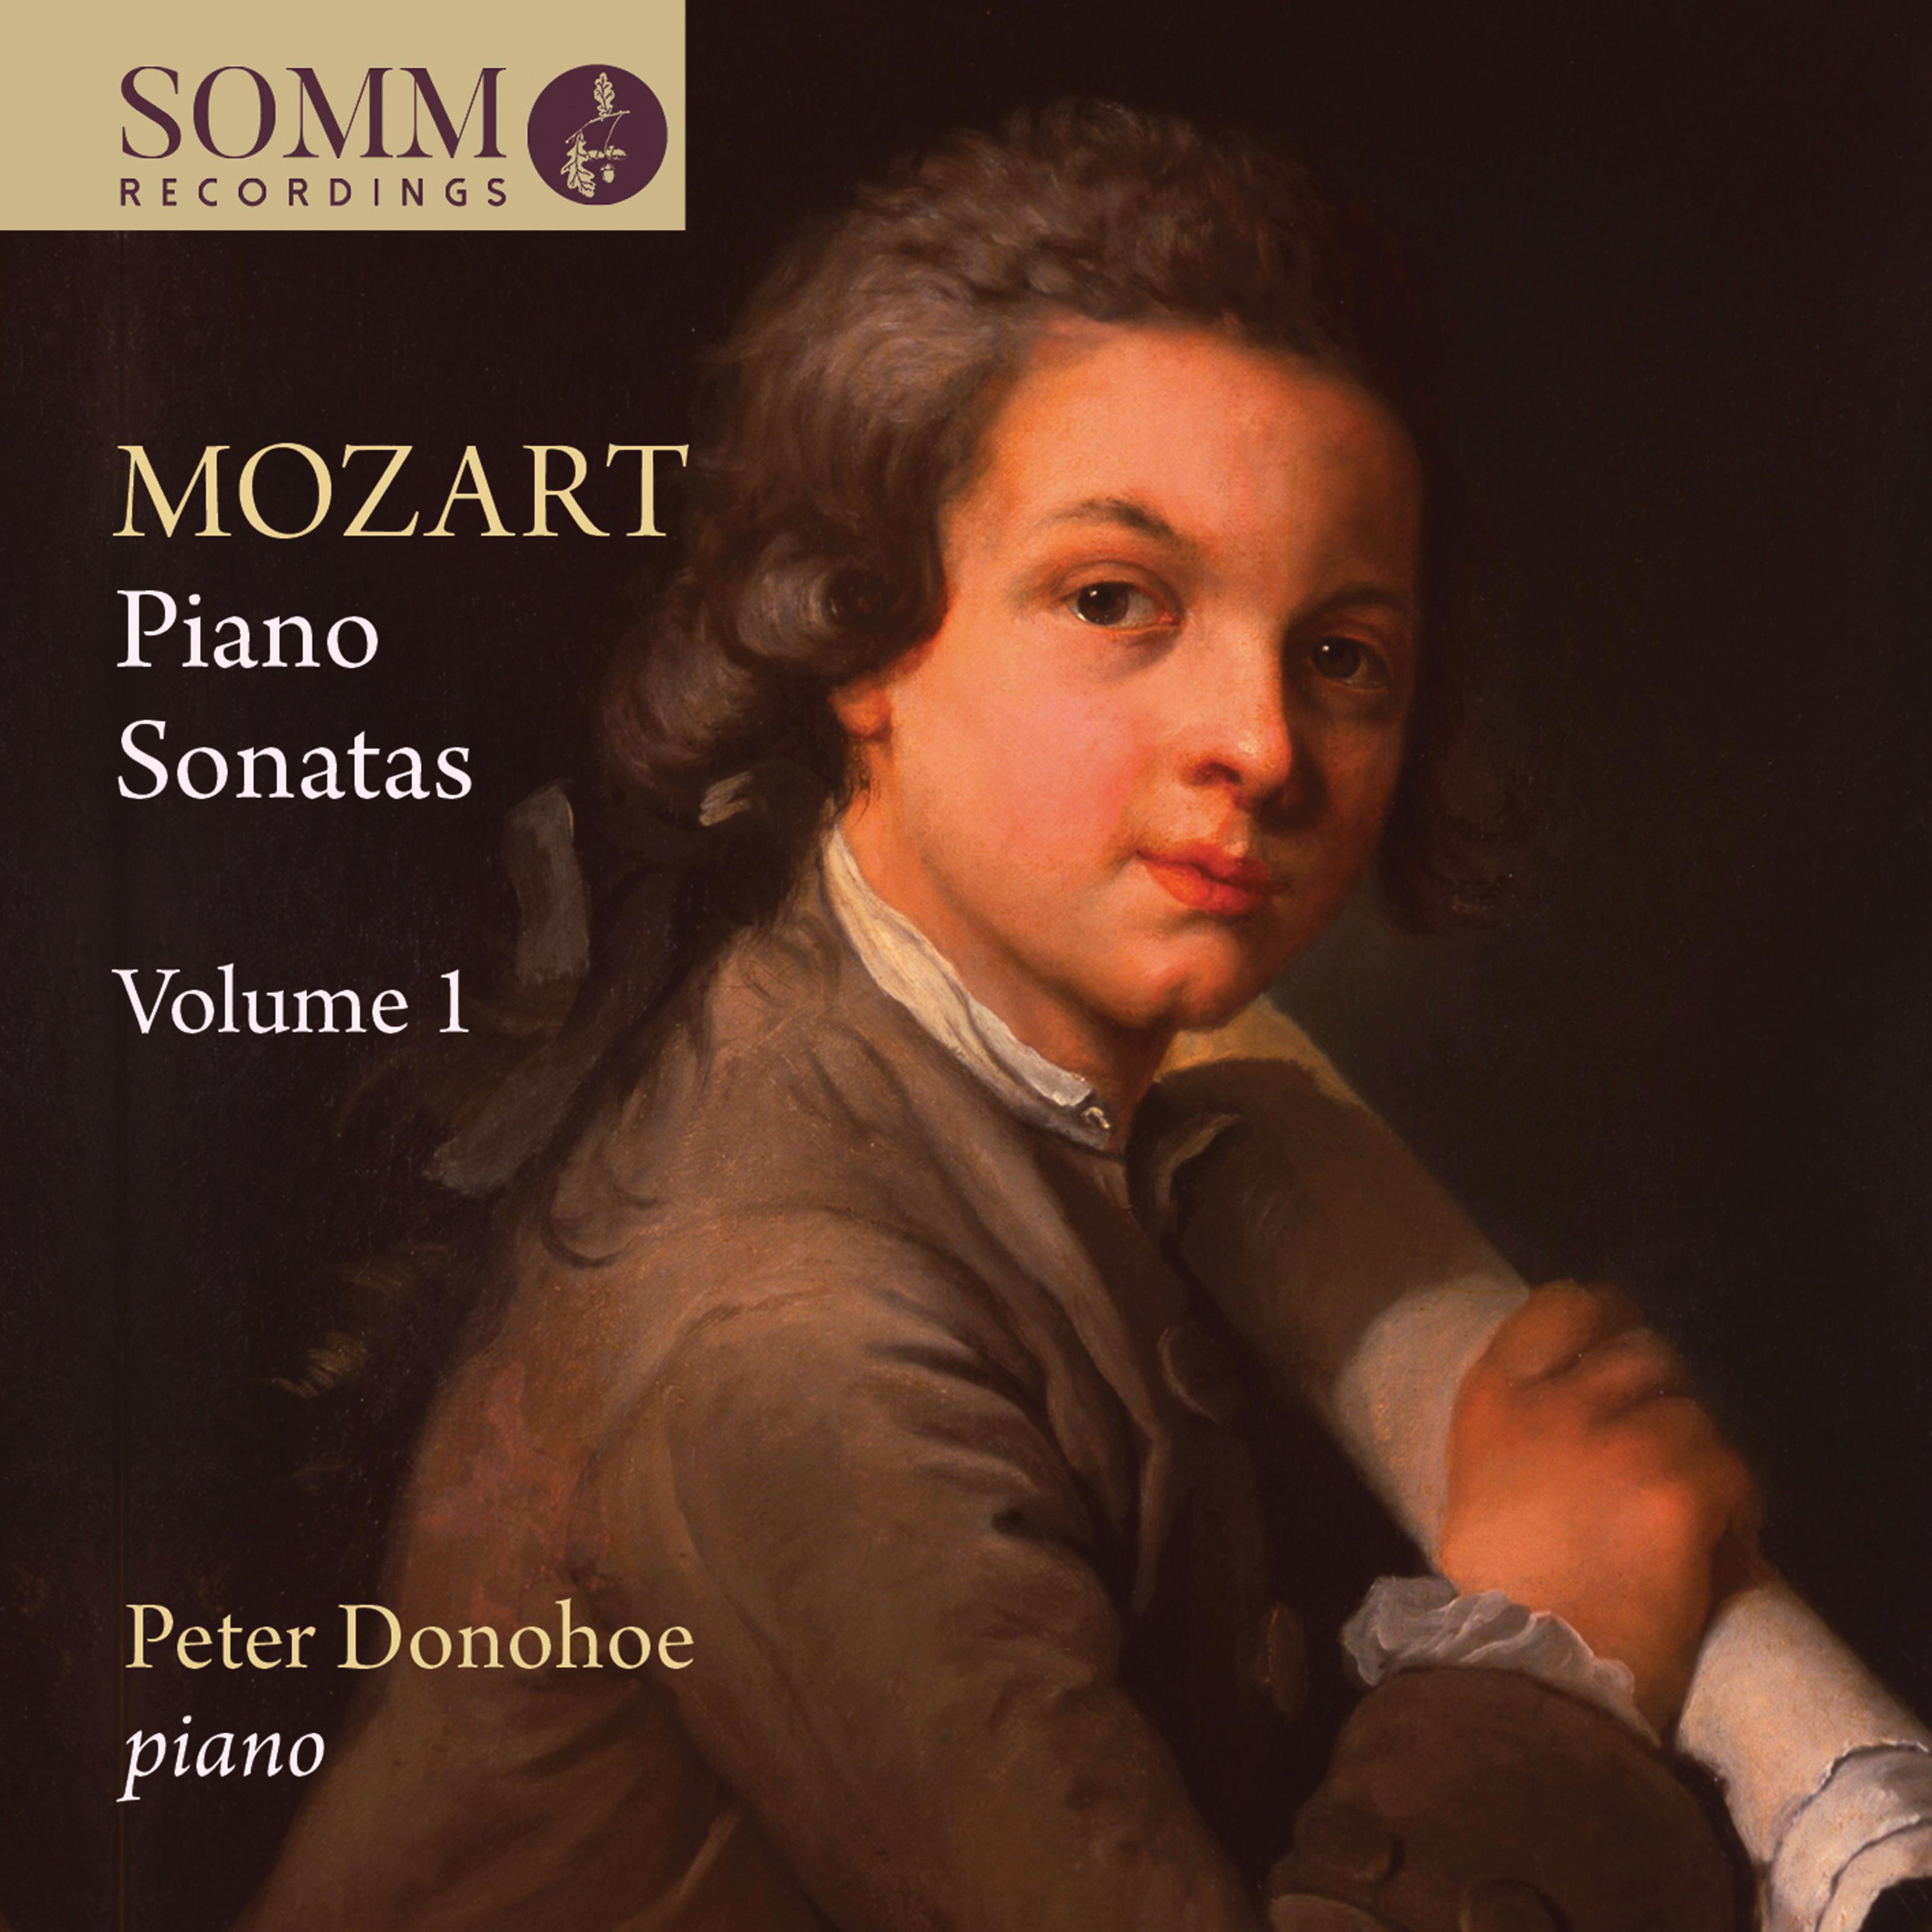 Piano Sonata No. 17 in B-Flat Major, K. 570: II. Adagio